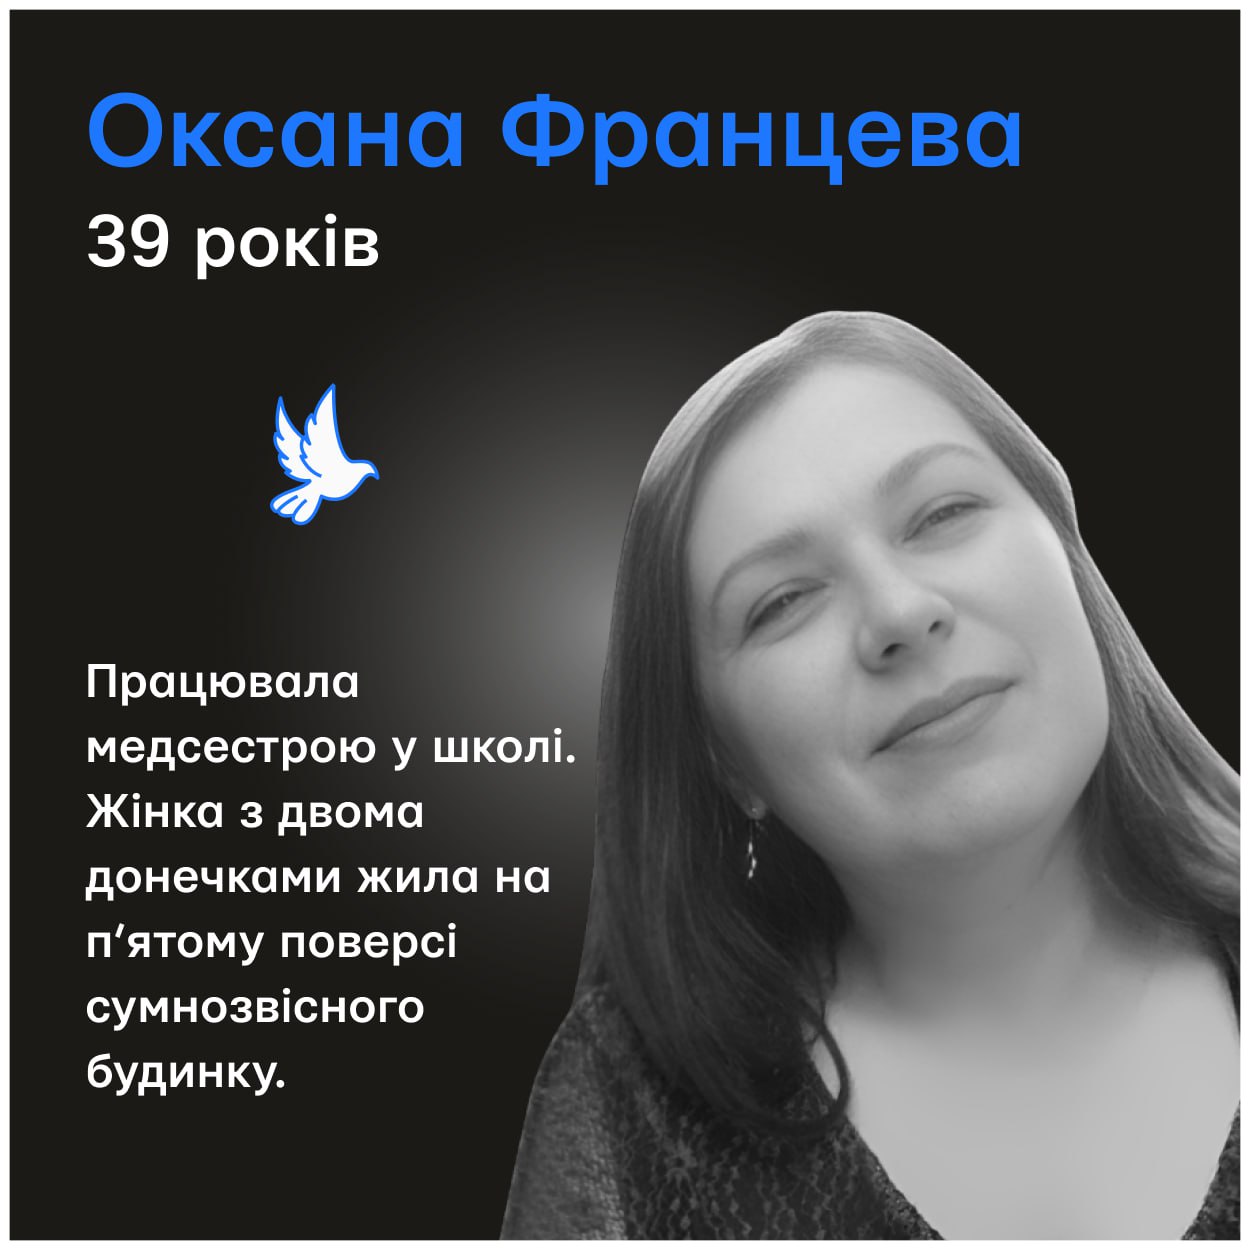 Оксана загинула внаслідок ракетної атаки - || фото: t.me/memorial_ukraine